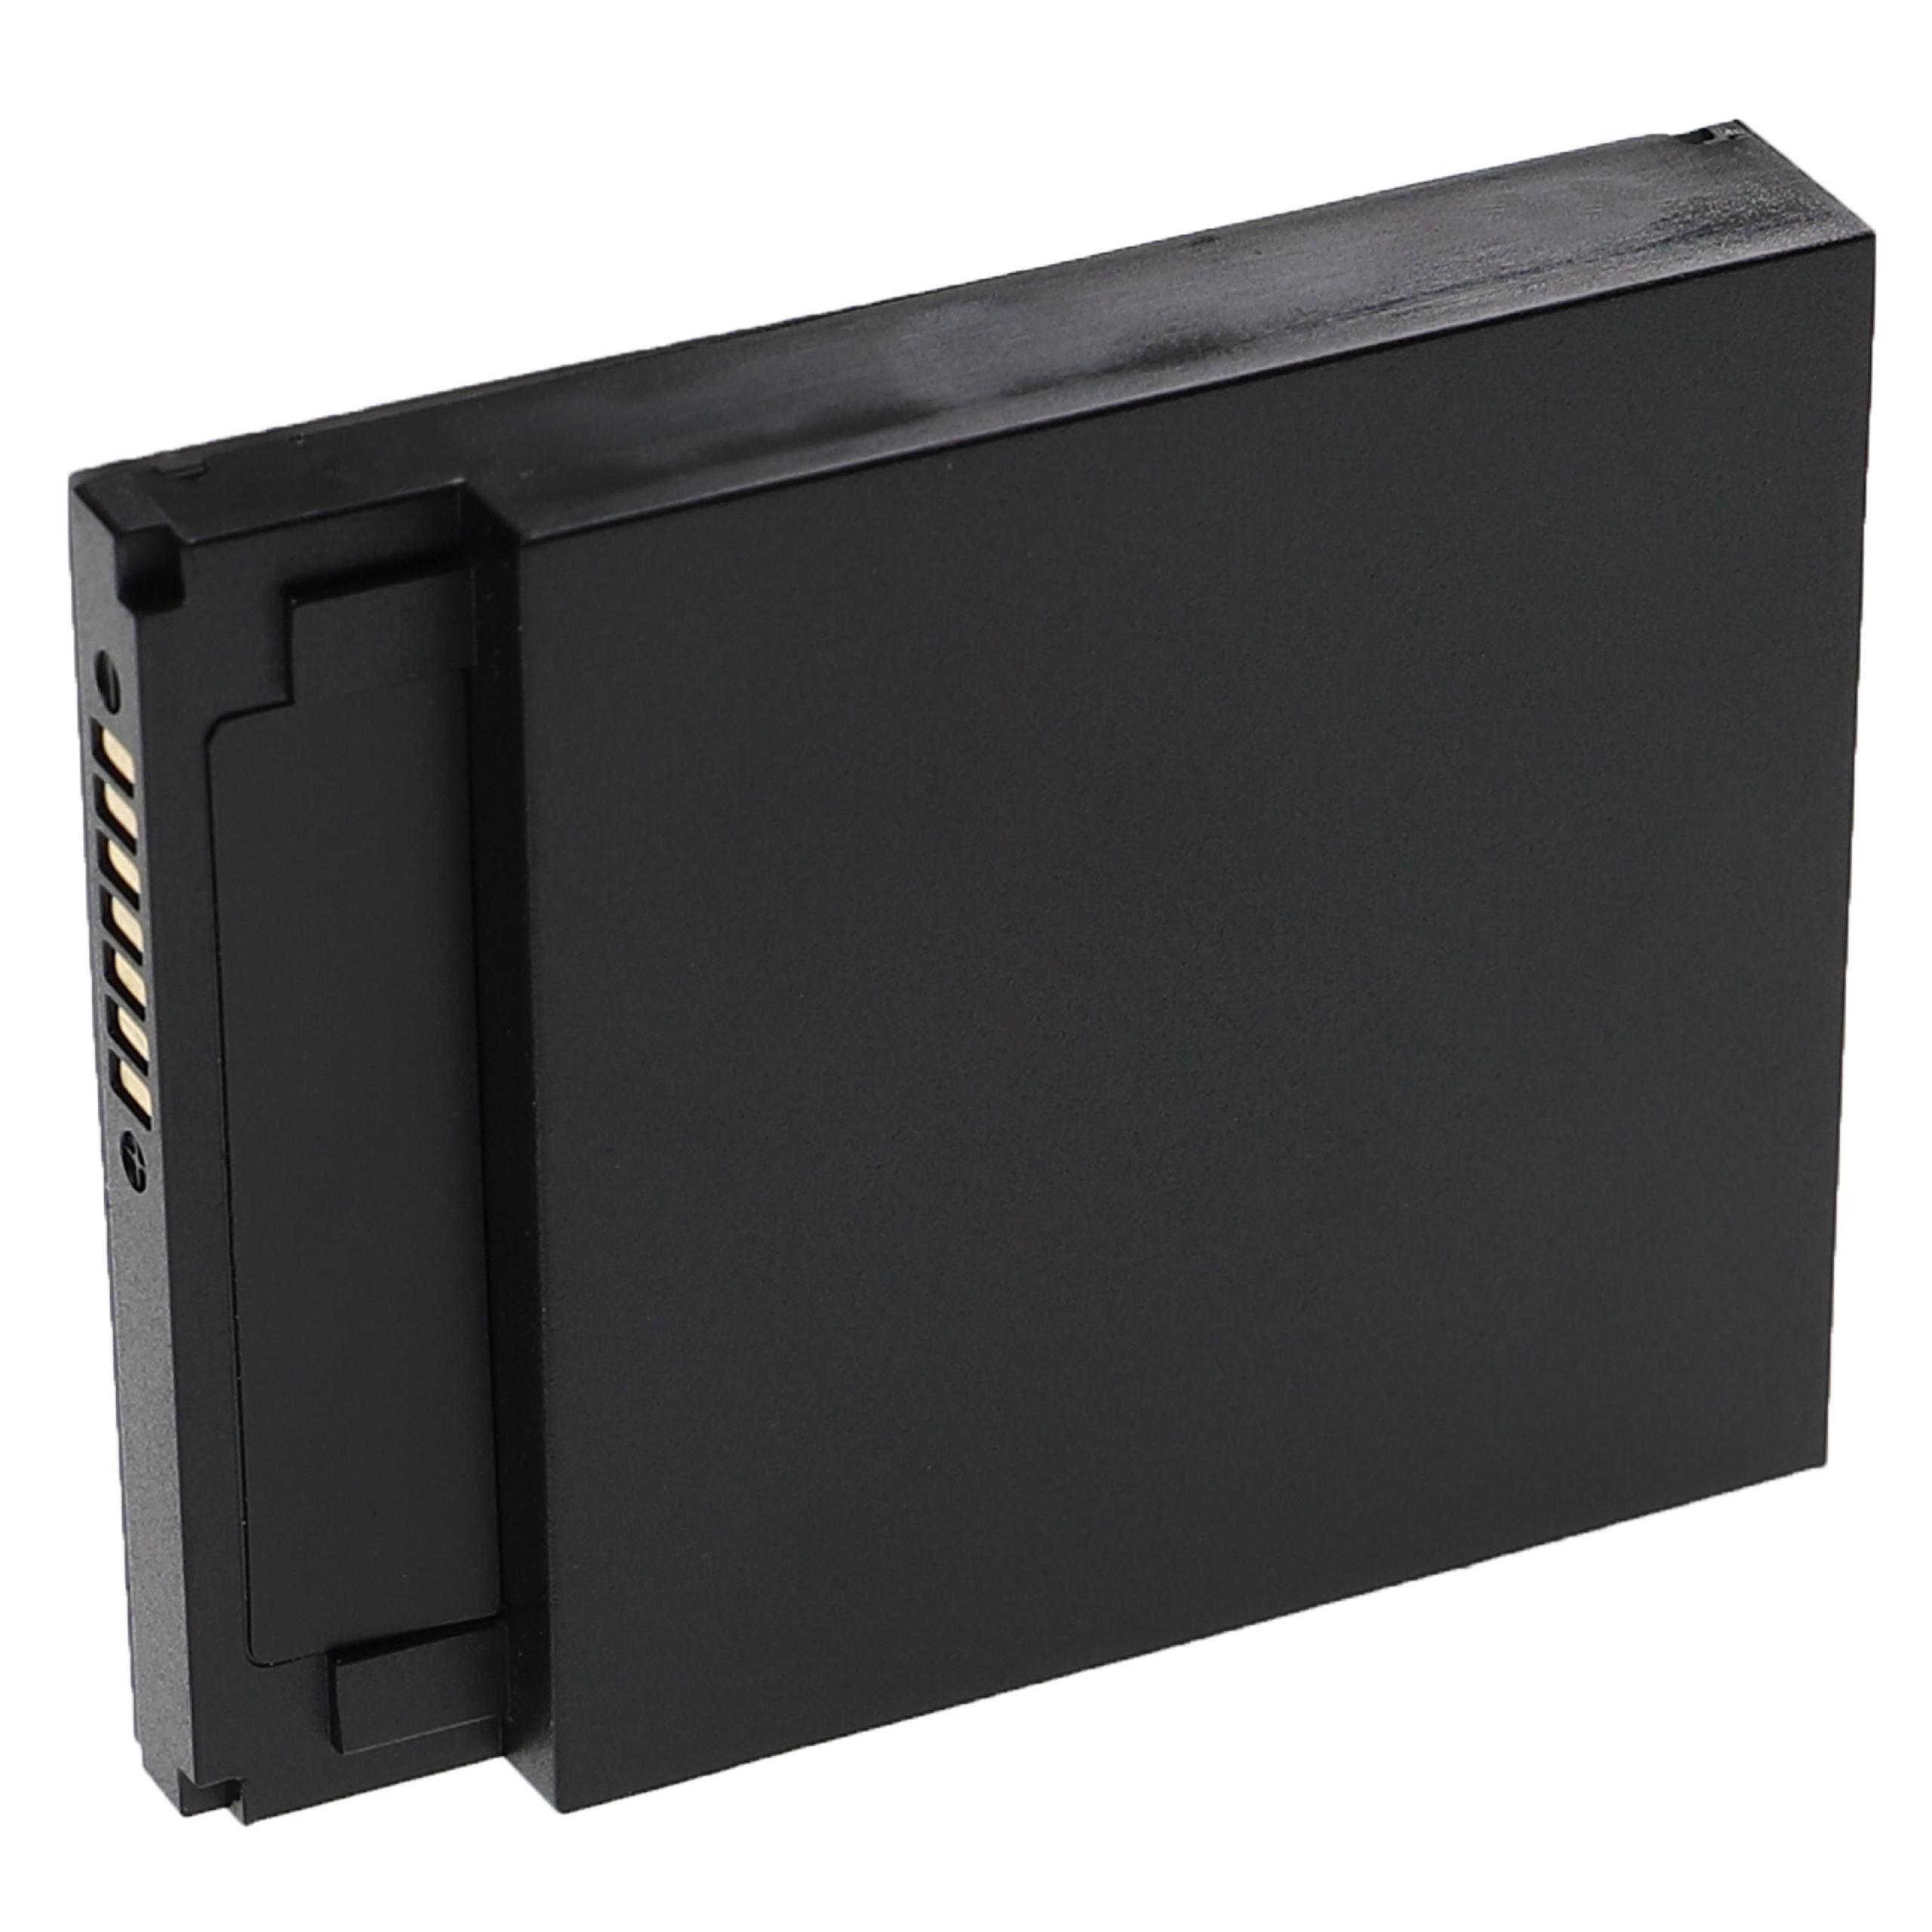 Akumulator do terminala płatniczego zamiennik Pax IS900 - 5250 mAh 3,7 V Li-Ion